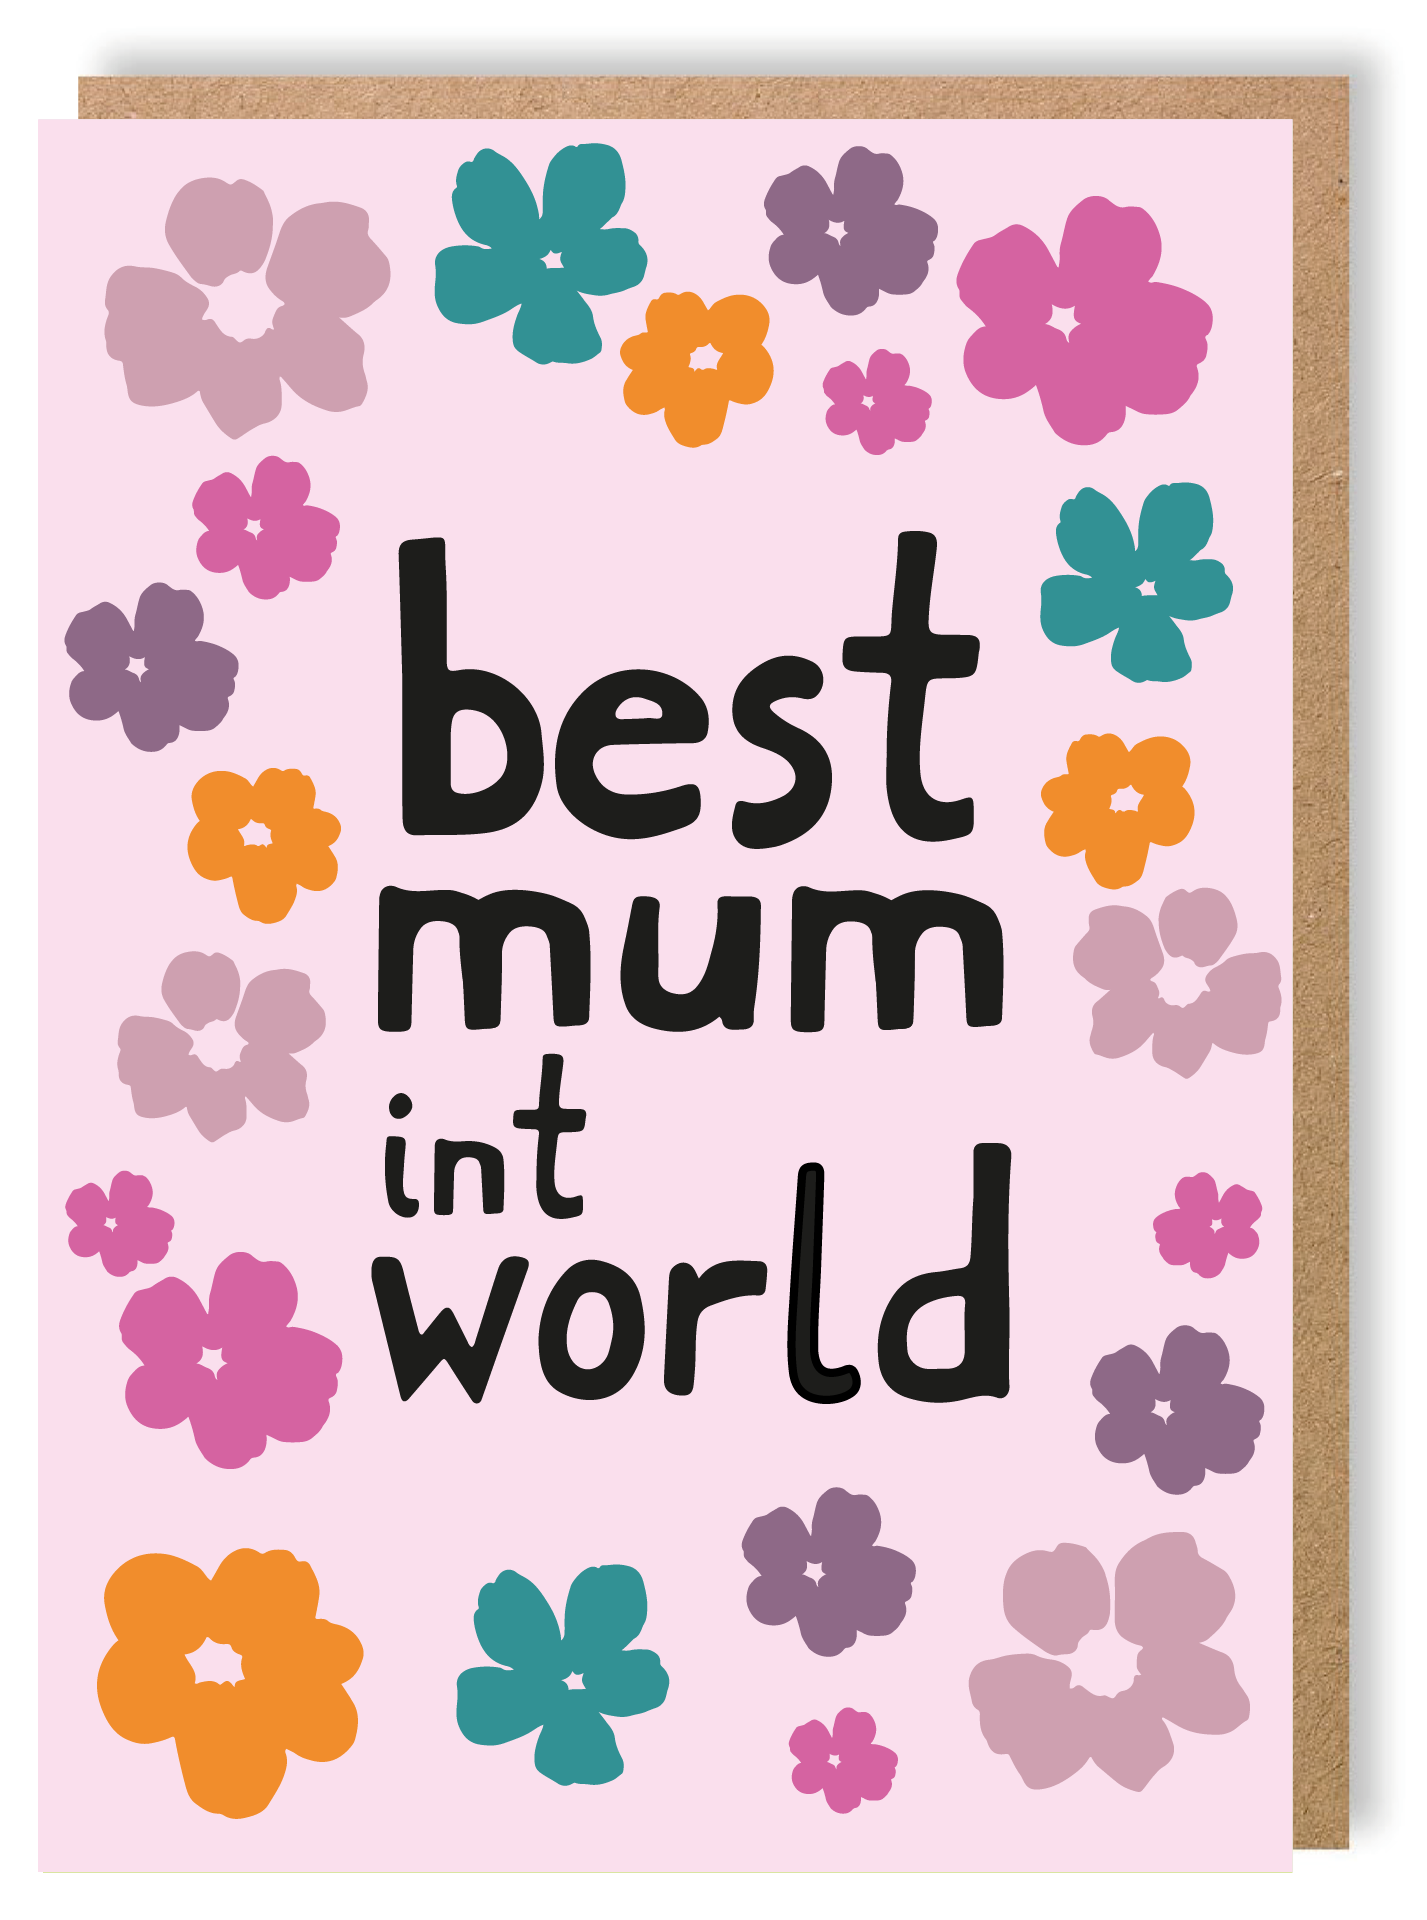 Best Mum Int World Flowers - Greetings Card - LukeHorton Art